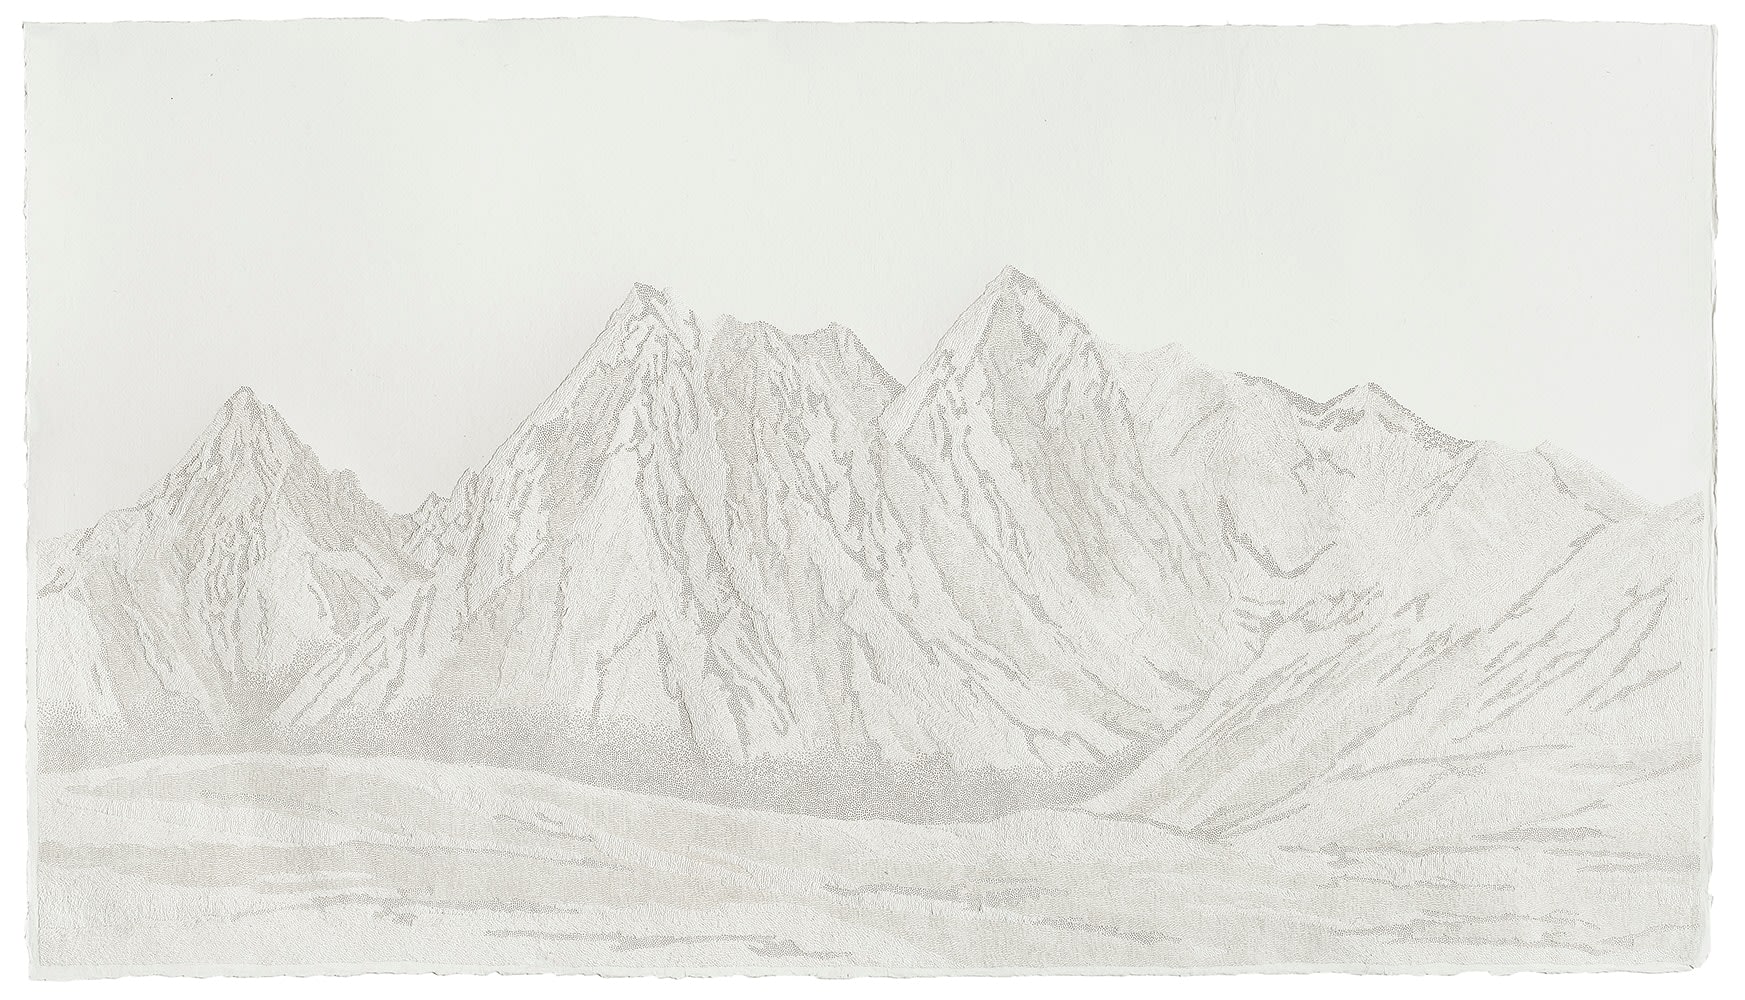 Fu Xiaotong 付小桐 (b. 1976), Mountain &ndash; 341,320 Pinpricks 341,320 孔之山, 2015